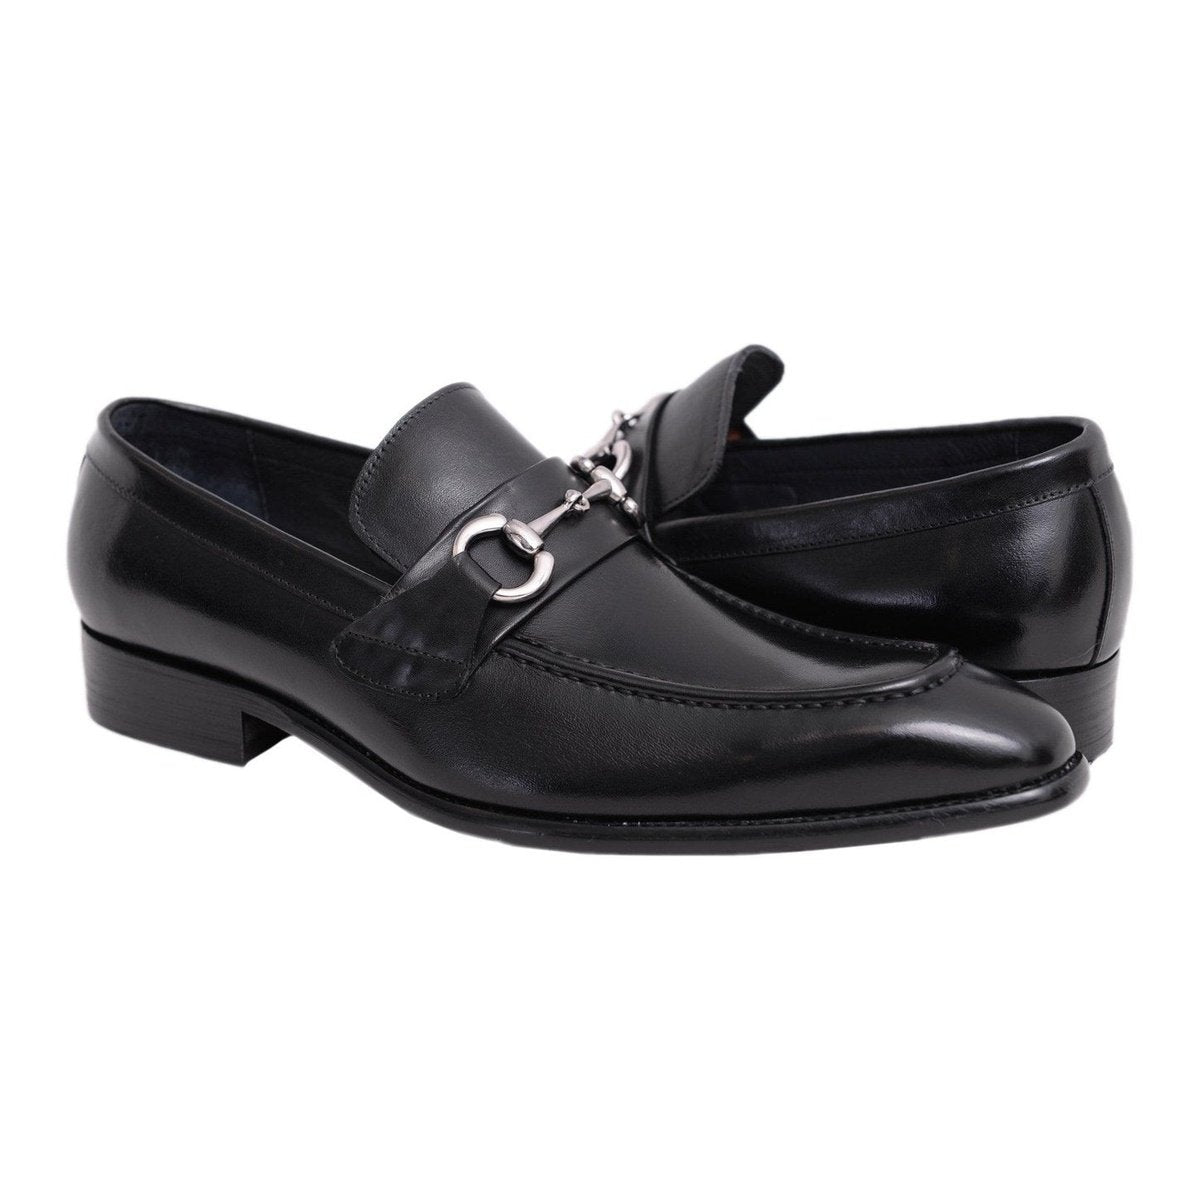 Carrucci Shoes For Amazon 9 D-M Carrucci Black Slip-on Loafer Apron Toe Leather Dress Shoes Decorative Buckle